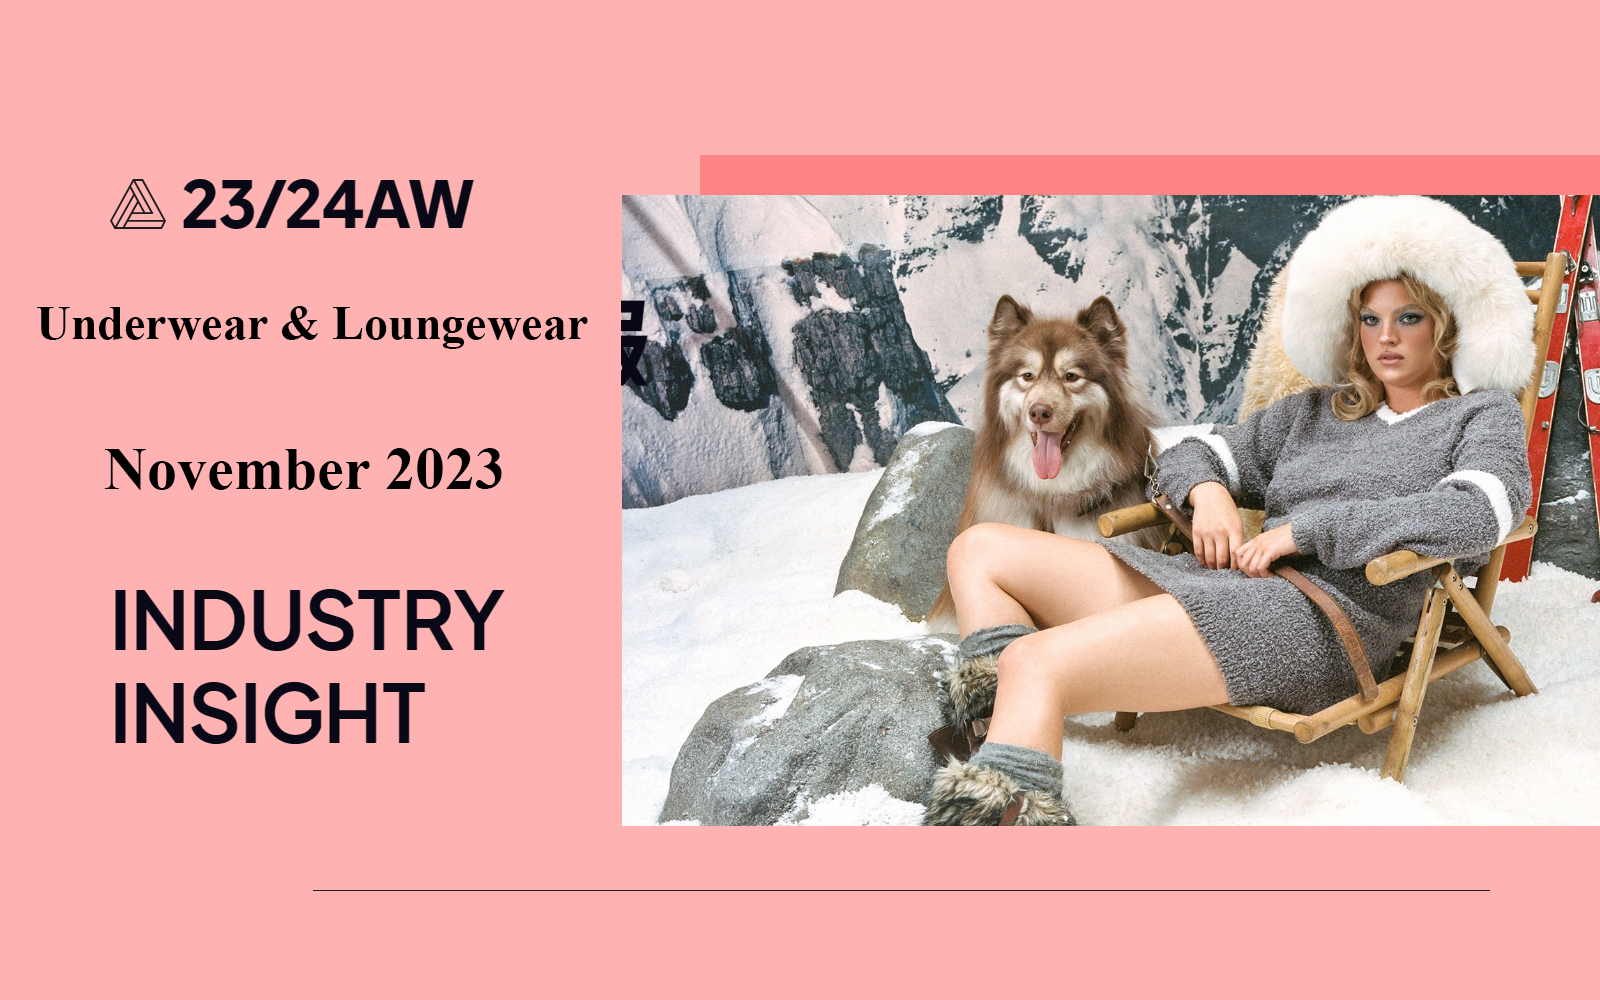 November 2023 -- The Industry Insight of Underwear & Loungewear